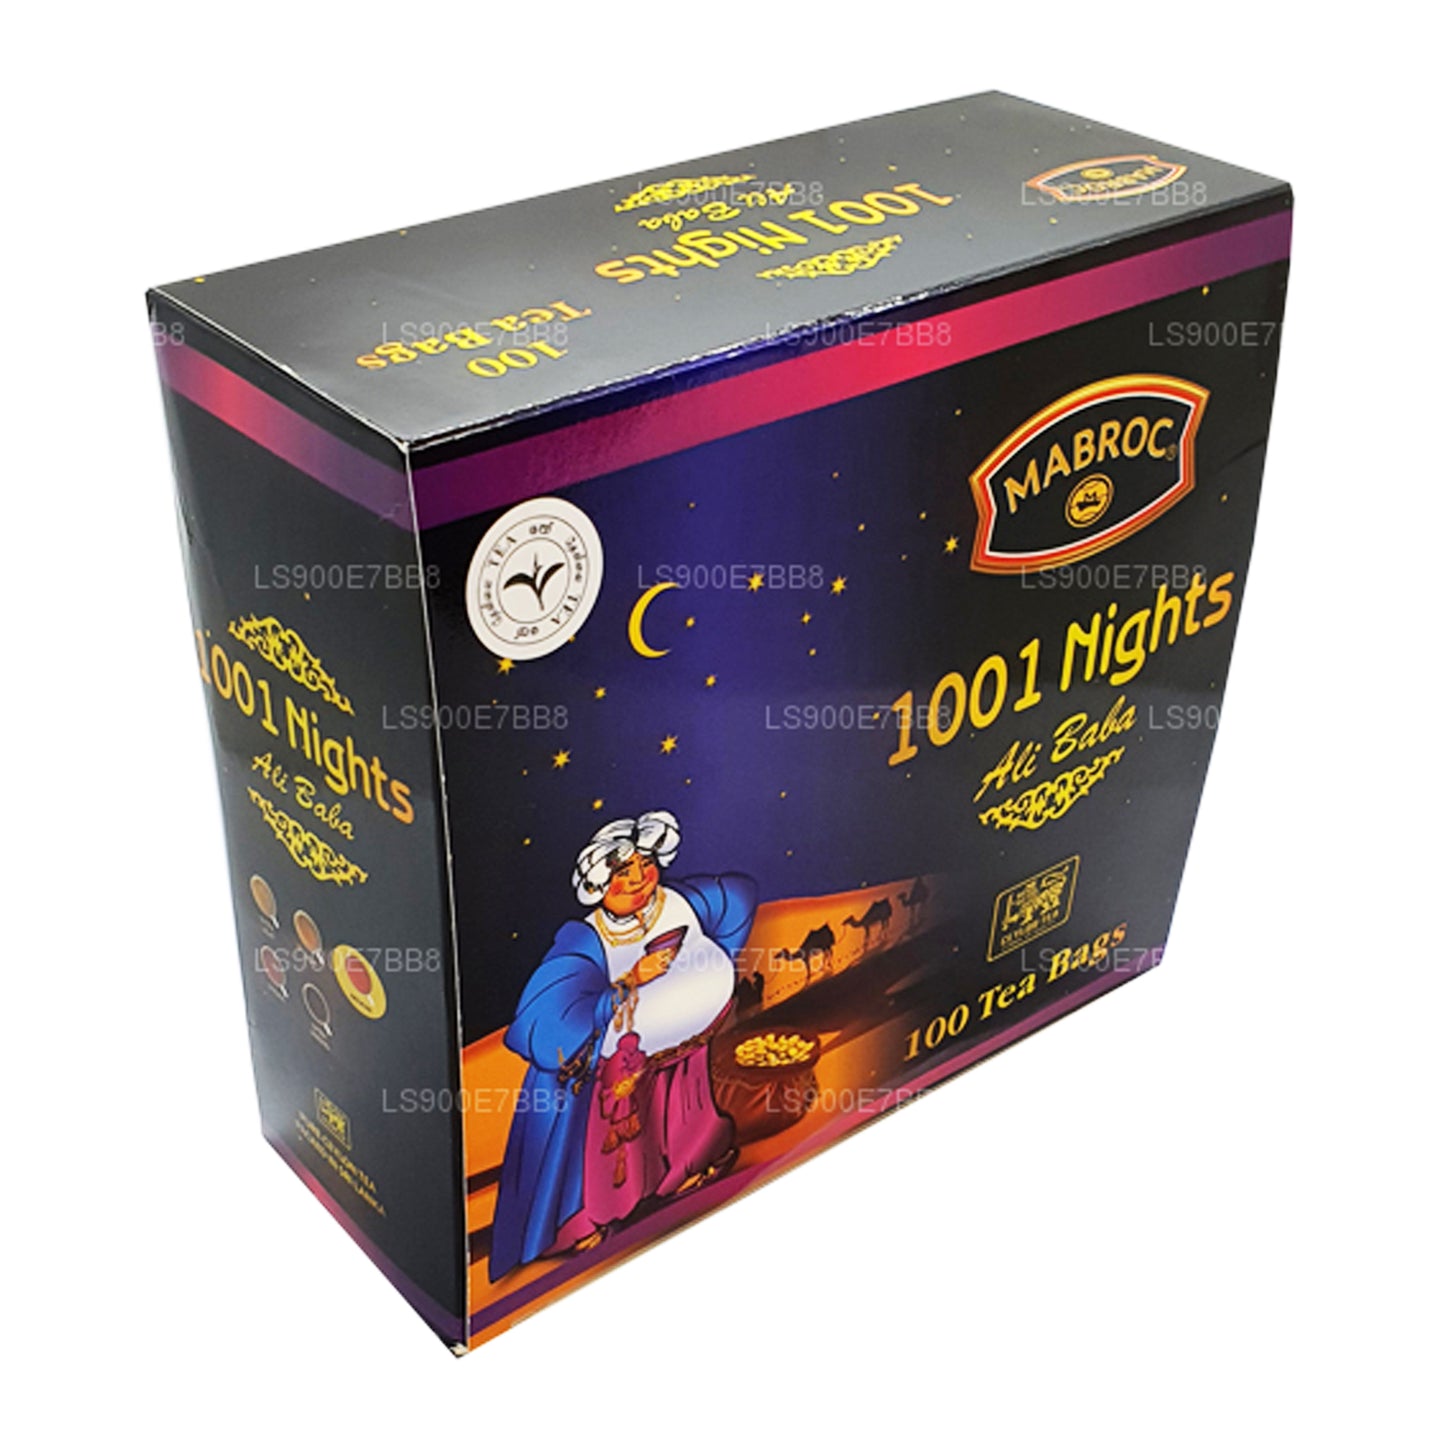 Mabroc 1001 星之夜 Ali Baba (200 g) 100 个茶包